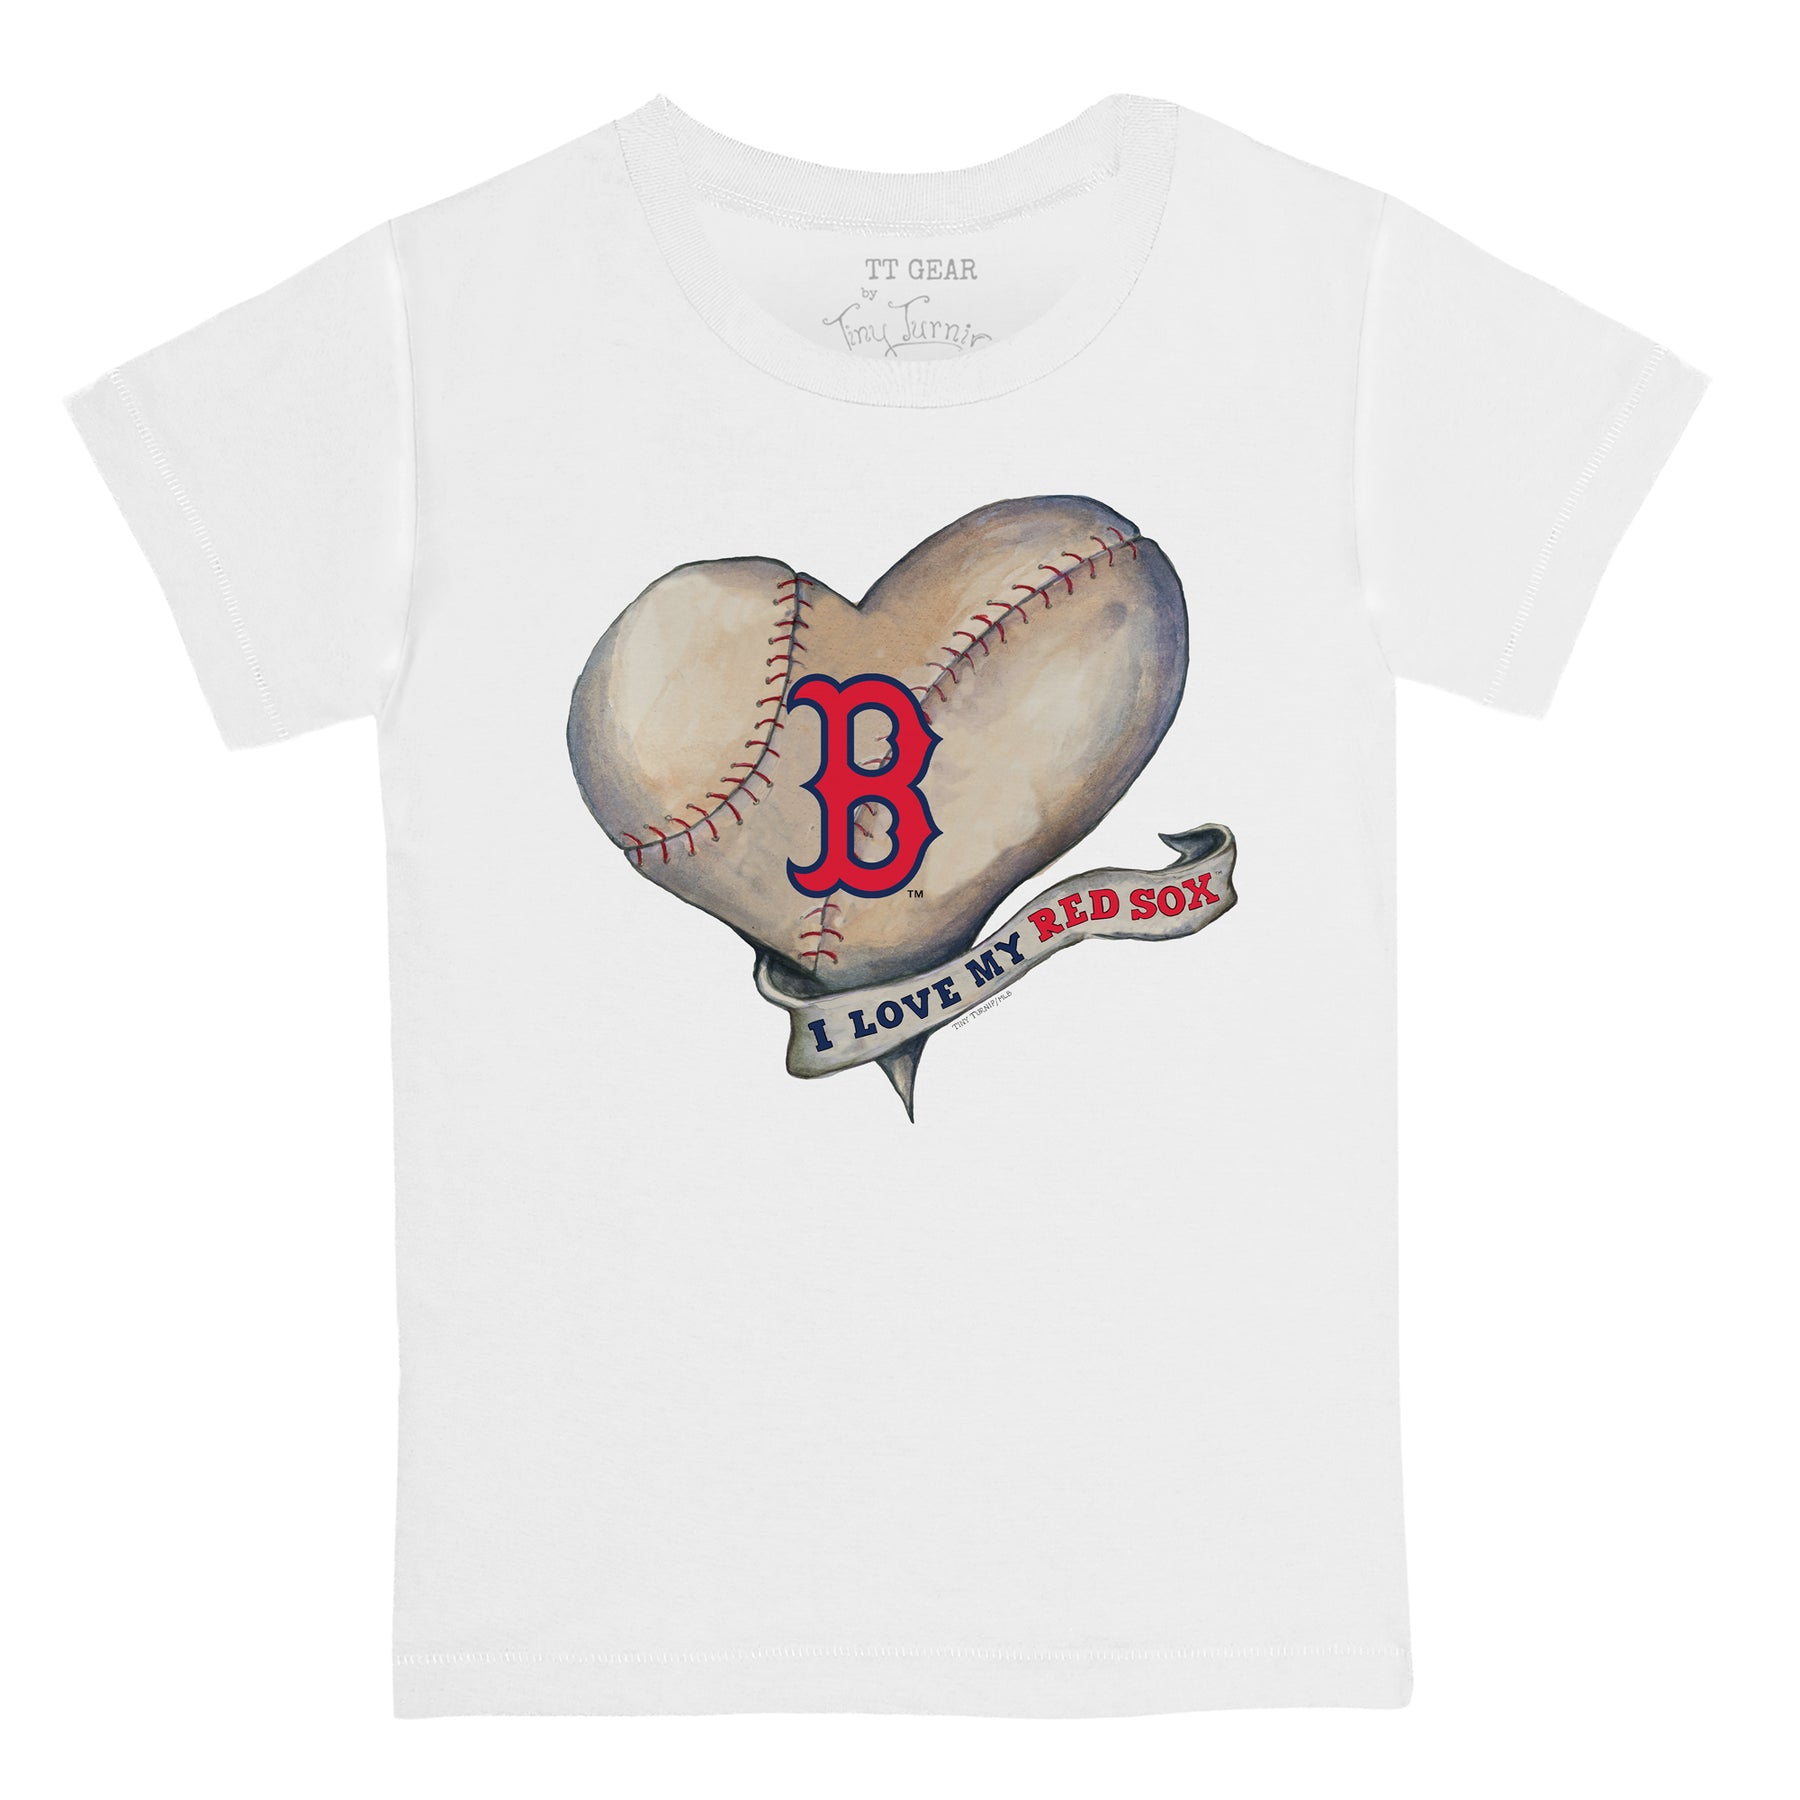 Unisex Tiny Turnip White/Red Boston Red Sox Triple Scoop 3/4-Sleeve Raglan T-Shirt Size: Small